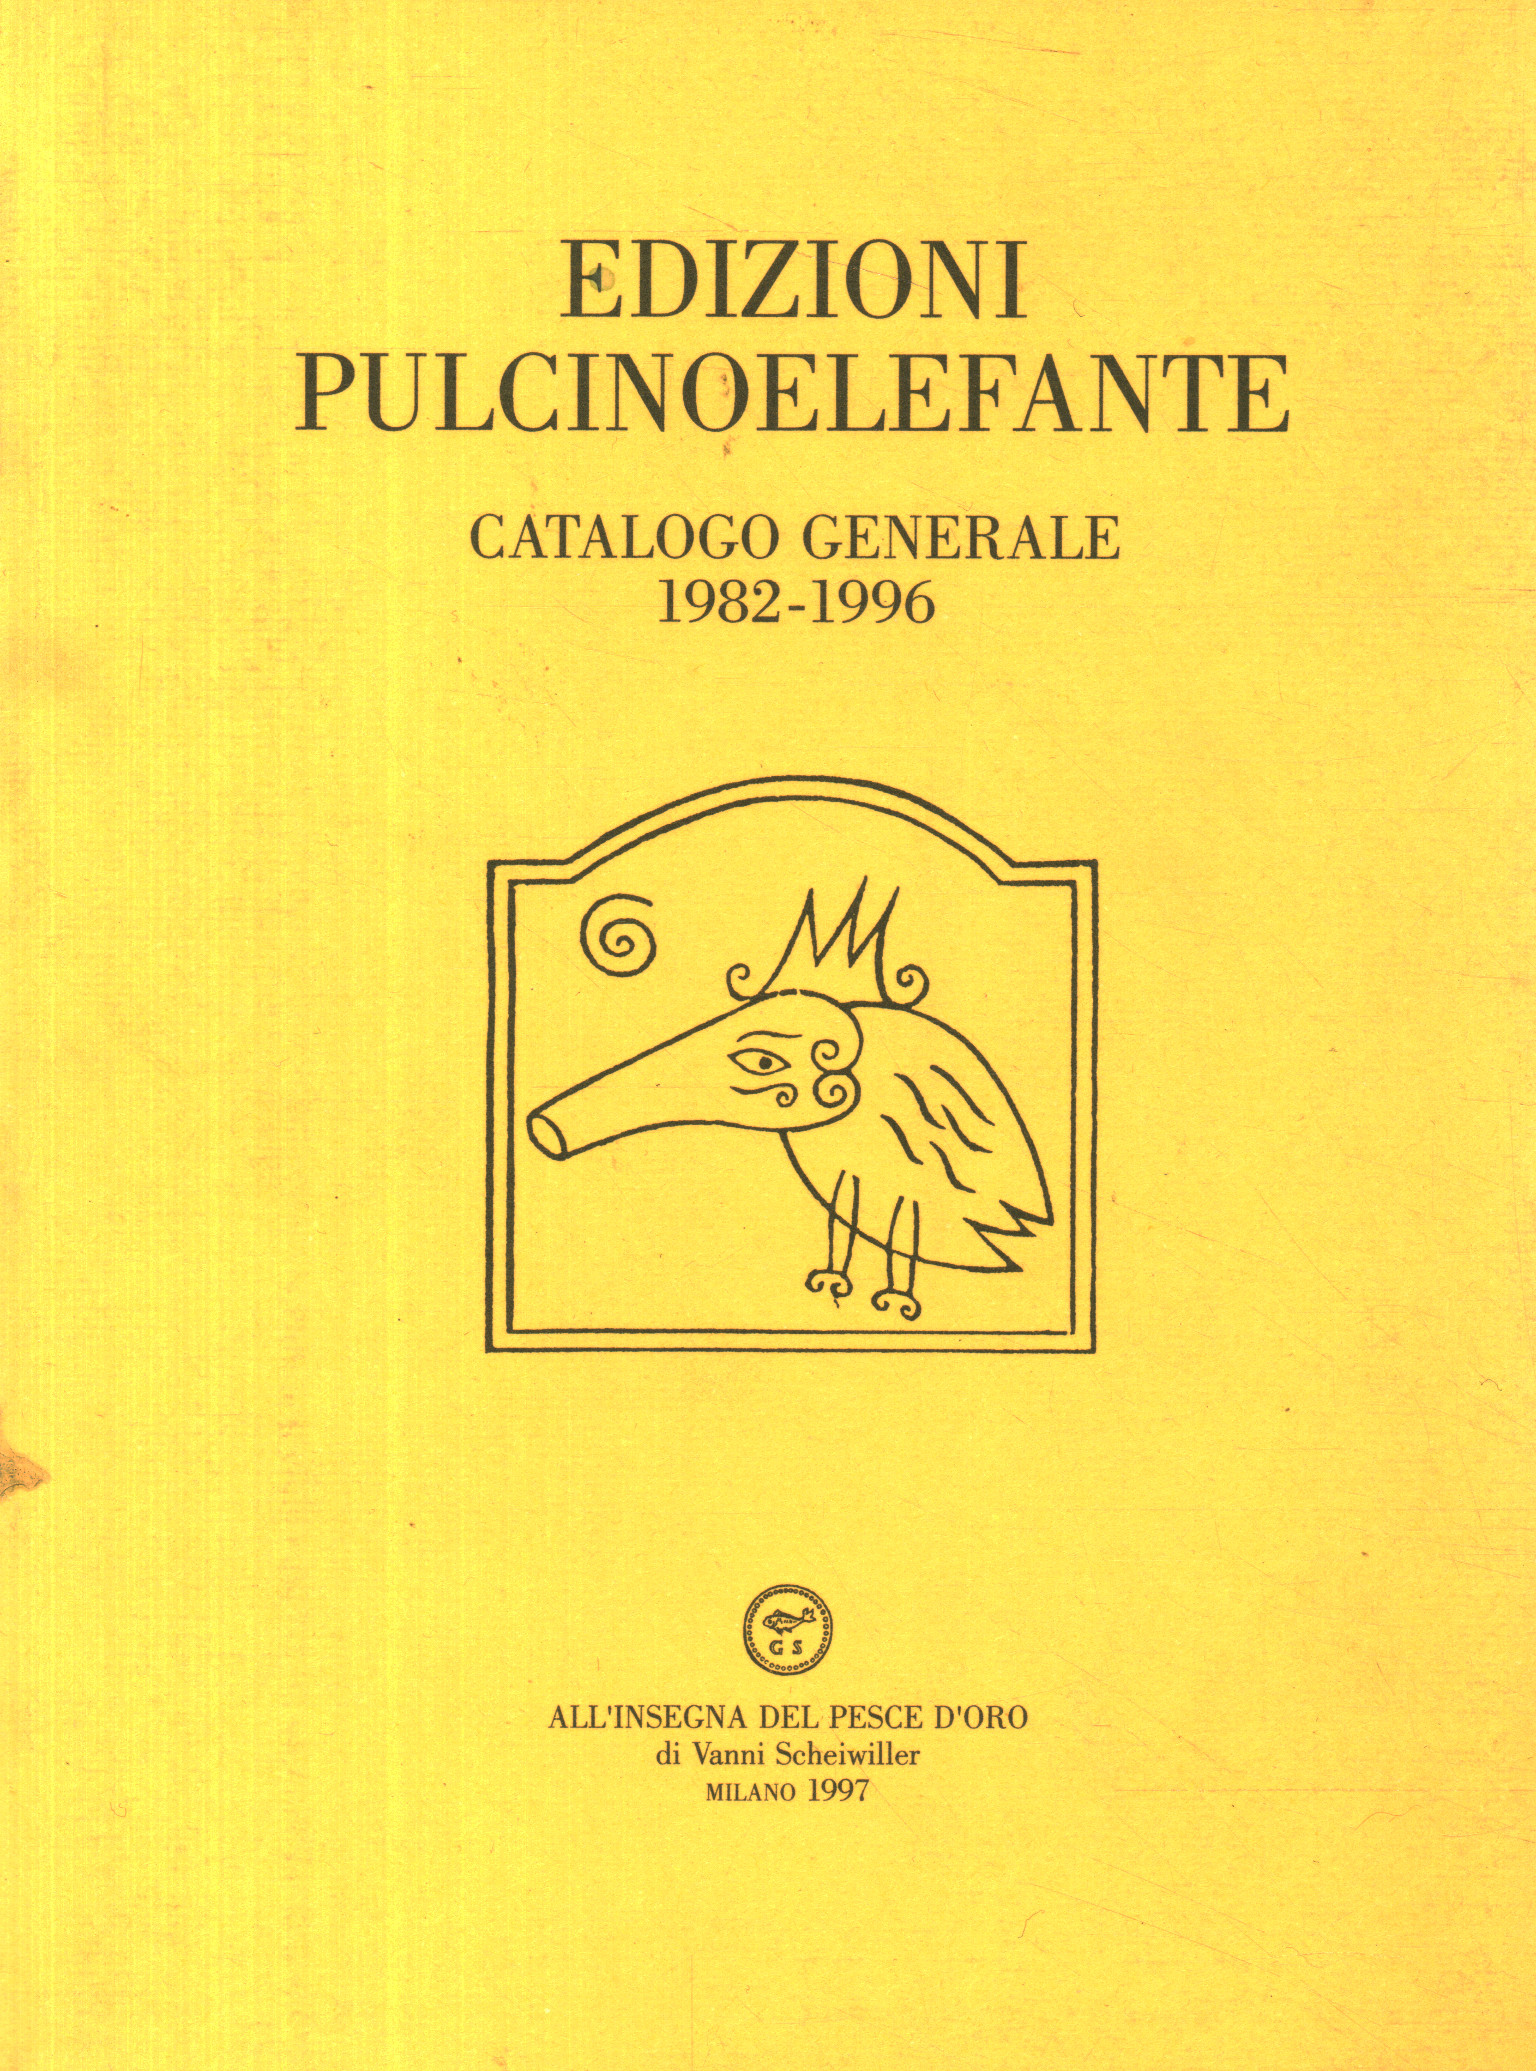 Pulcinoelephant Editionen. Gesamtkatalog, Pulcinoelephant Editions. Gesamtkatalog%